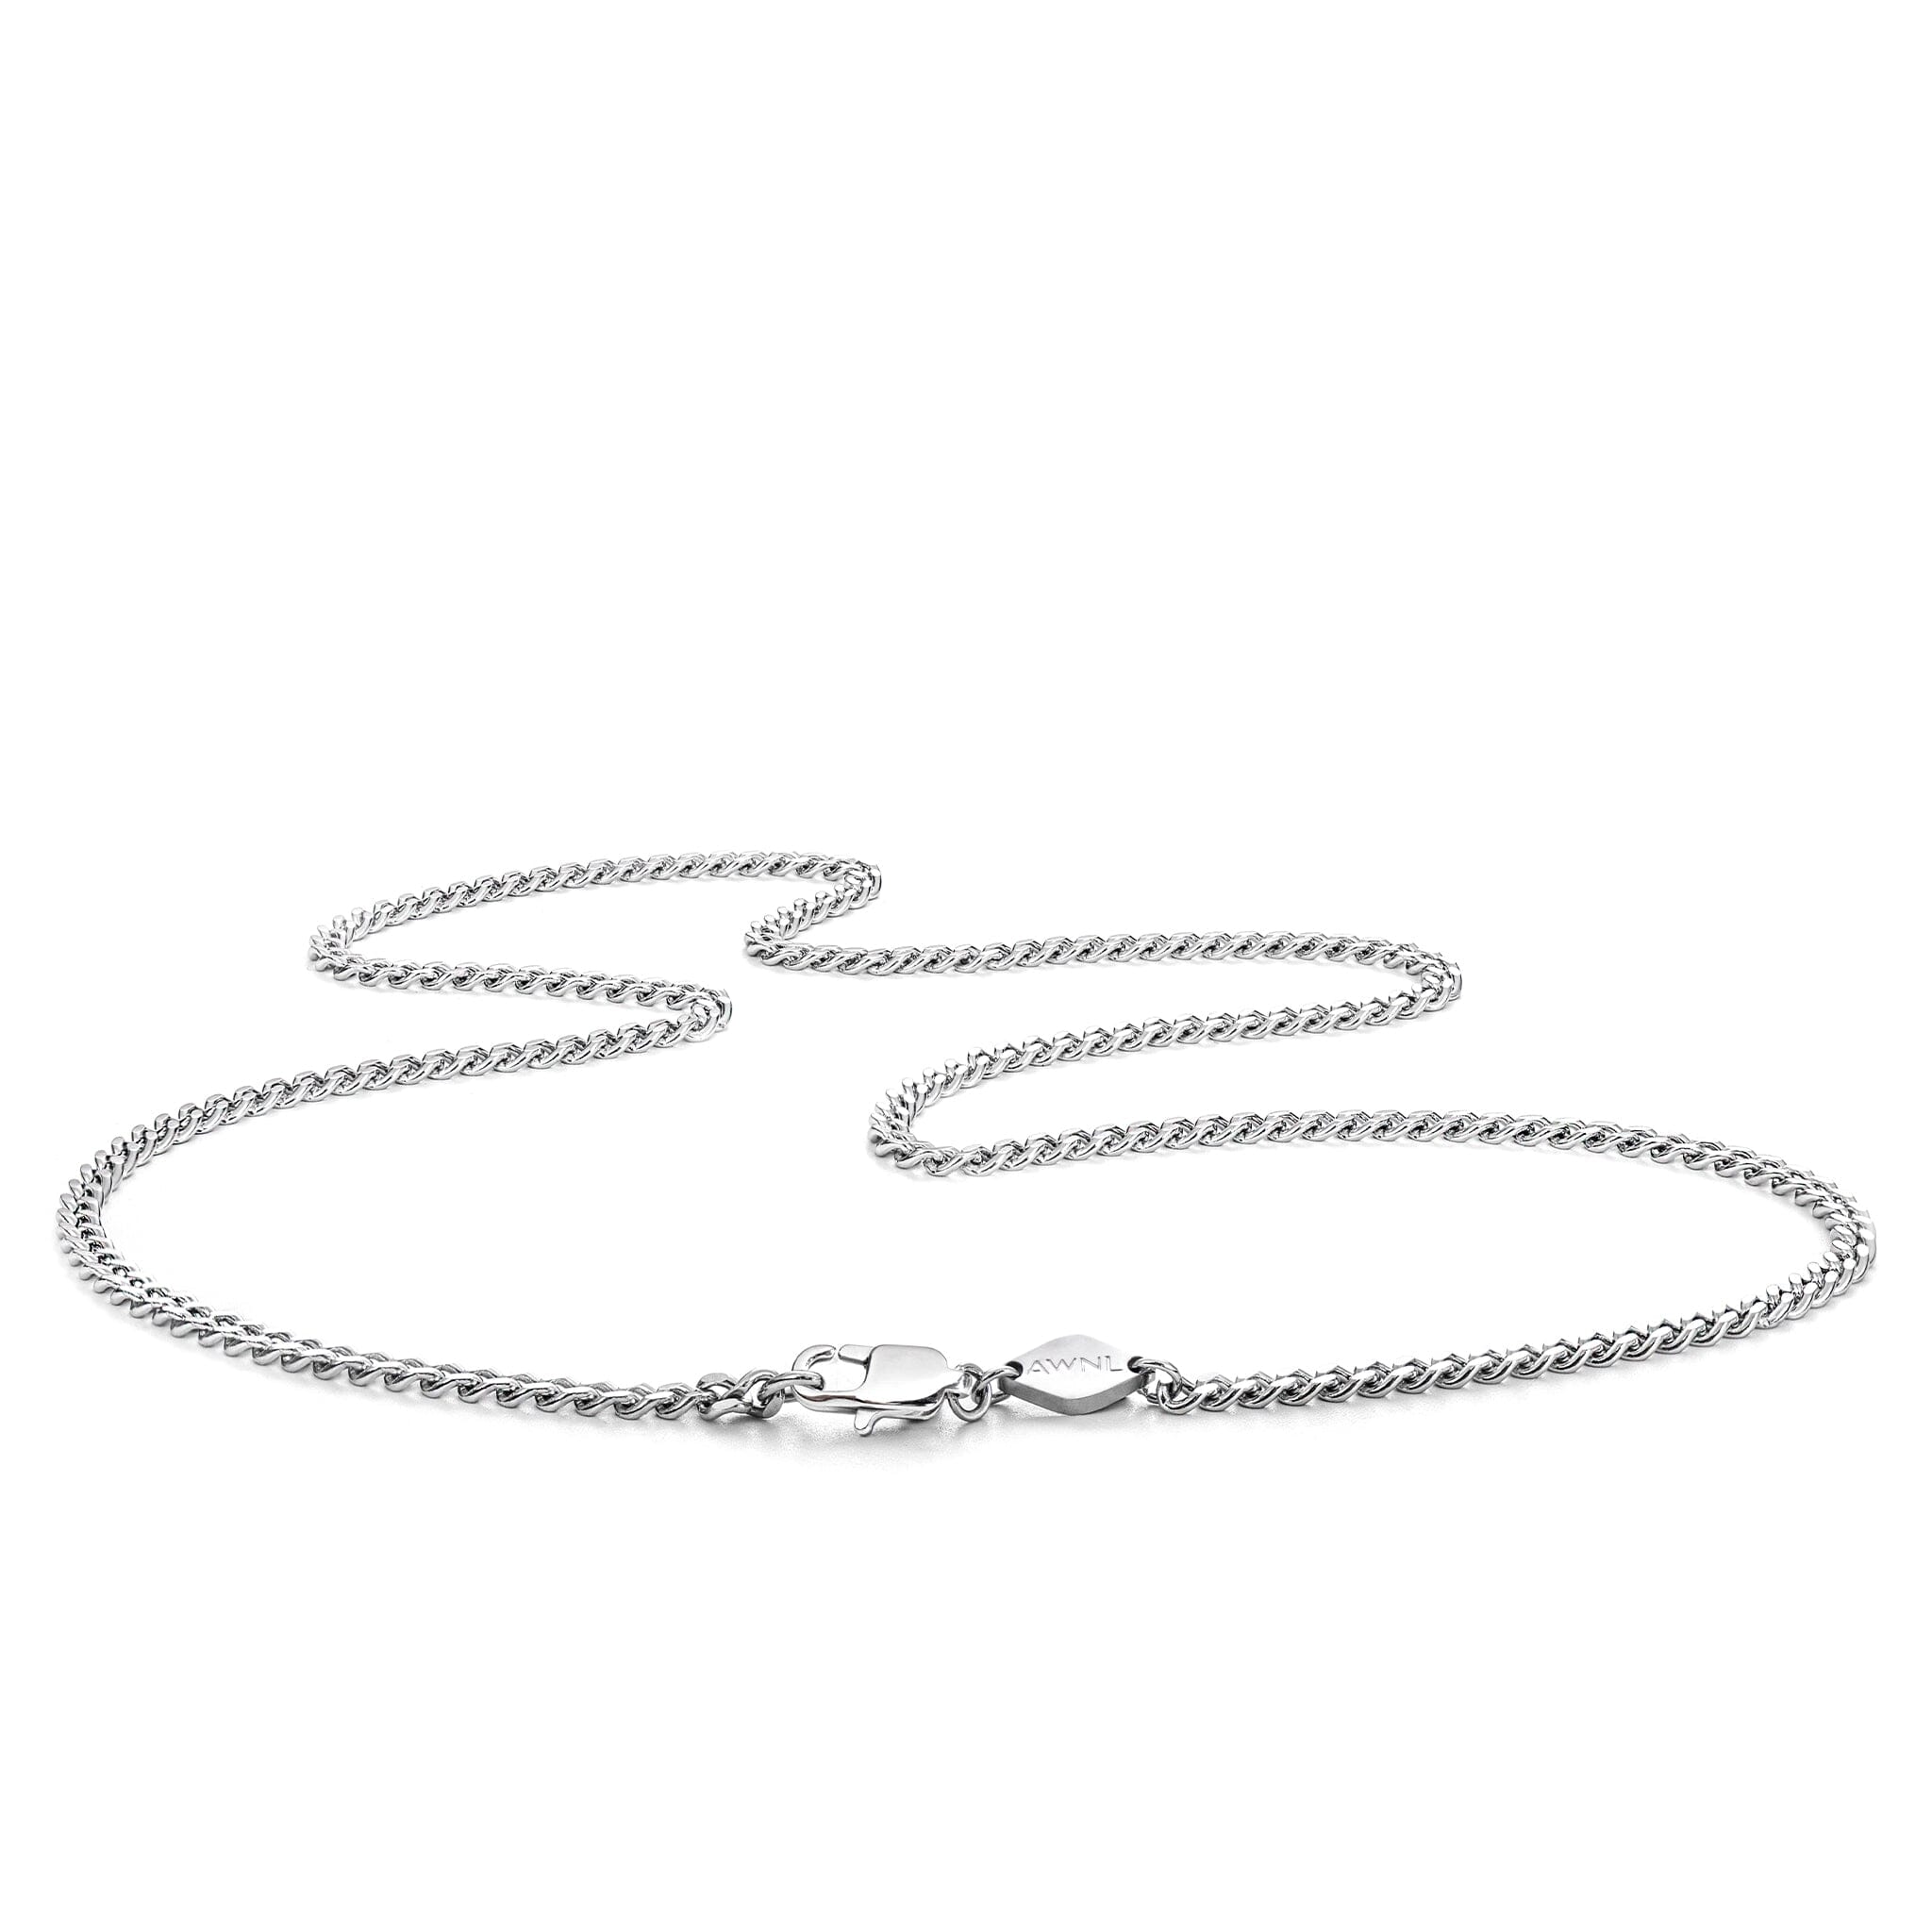 Silver Obsidian Dragon Pendant Necklace Necklaces AWNL 